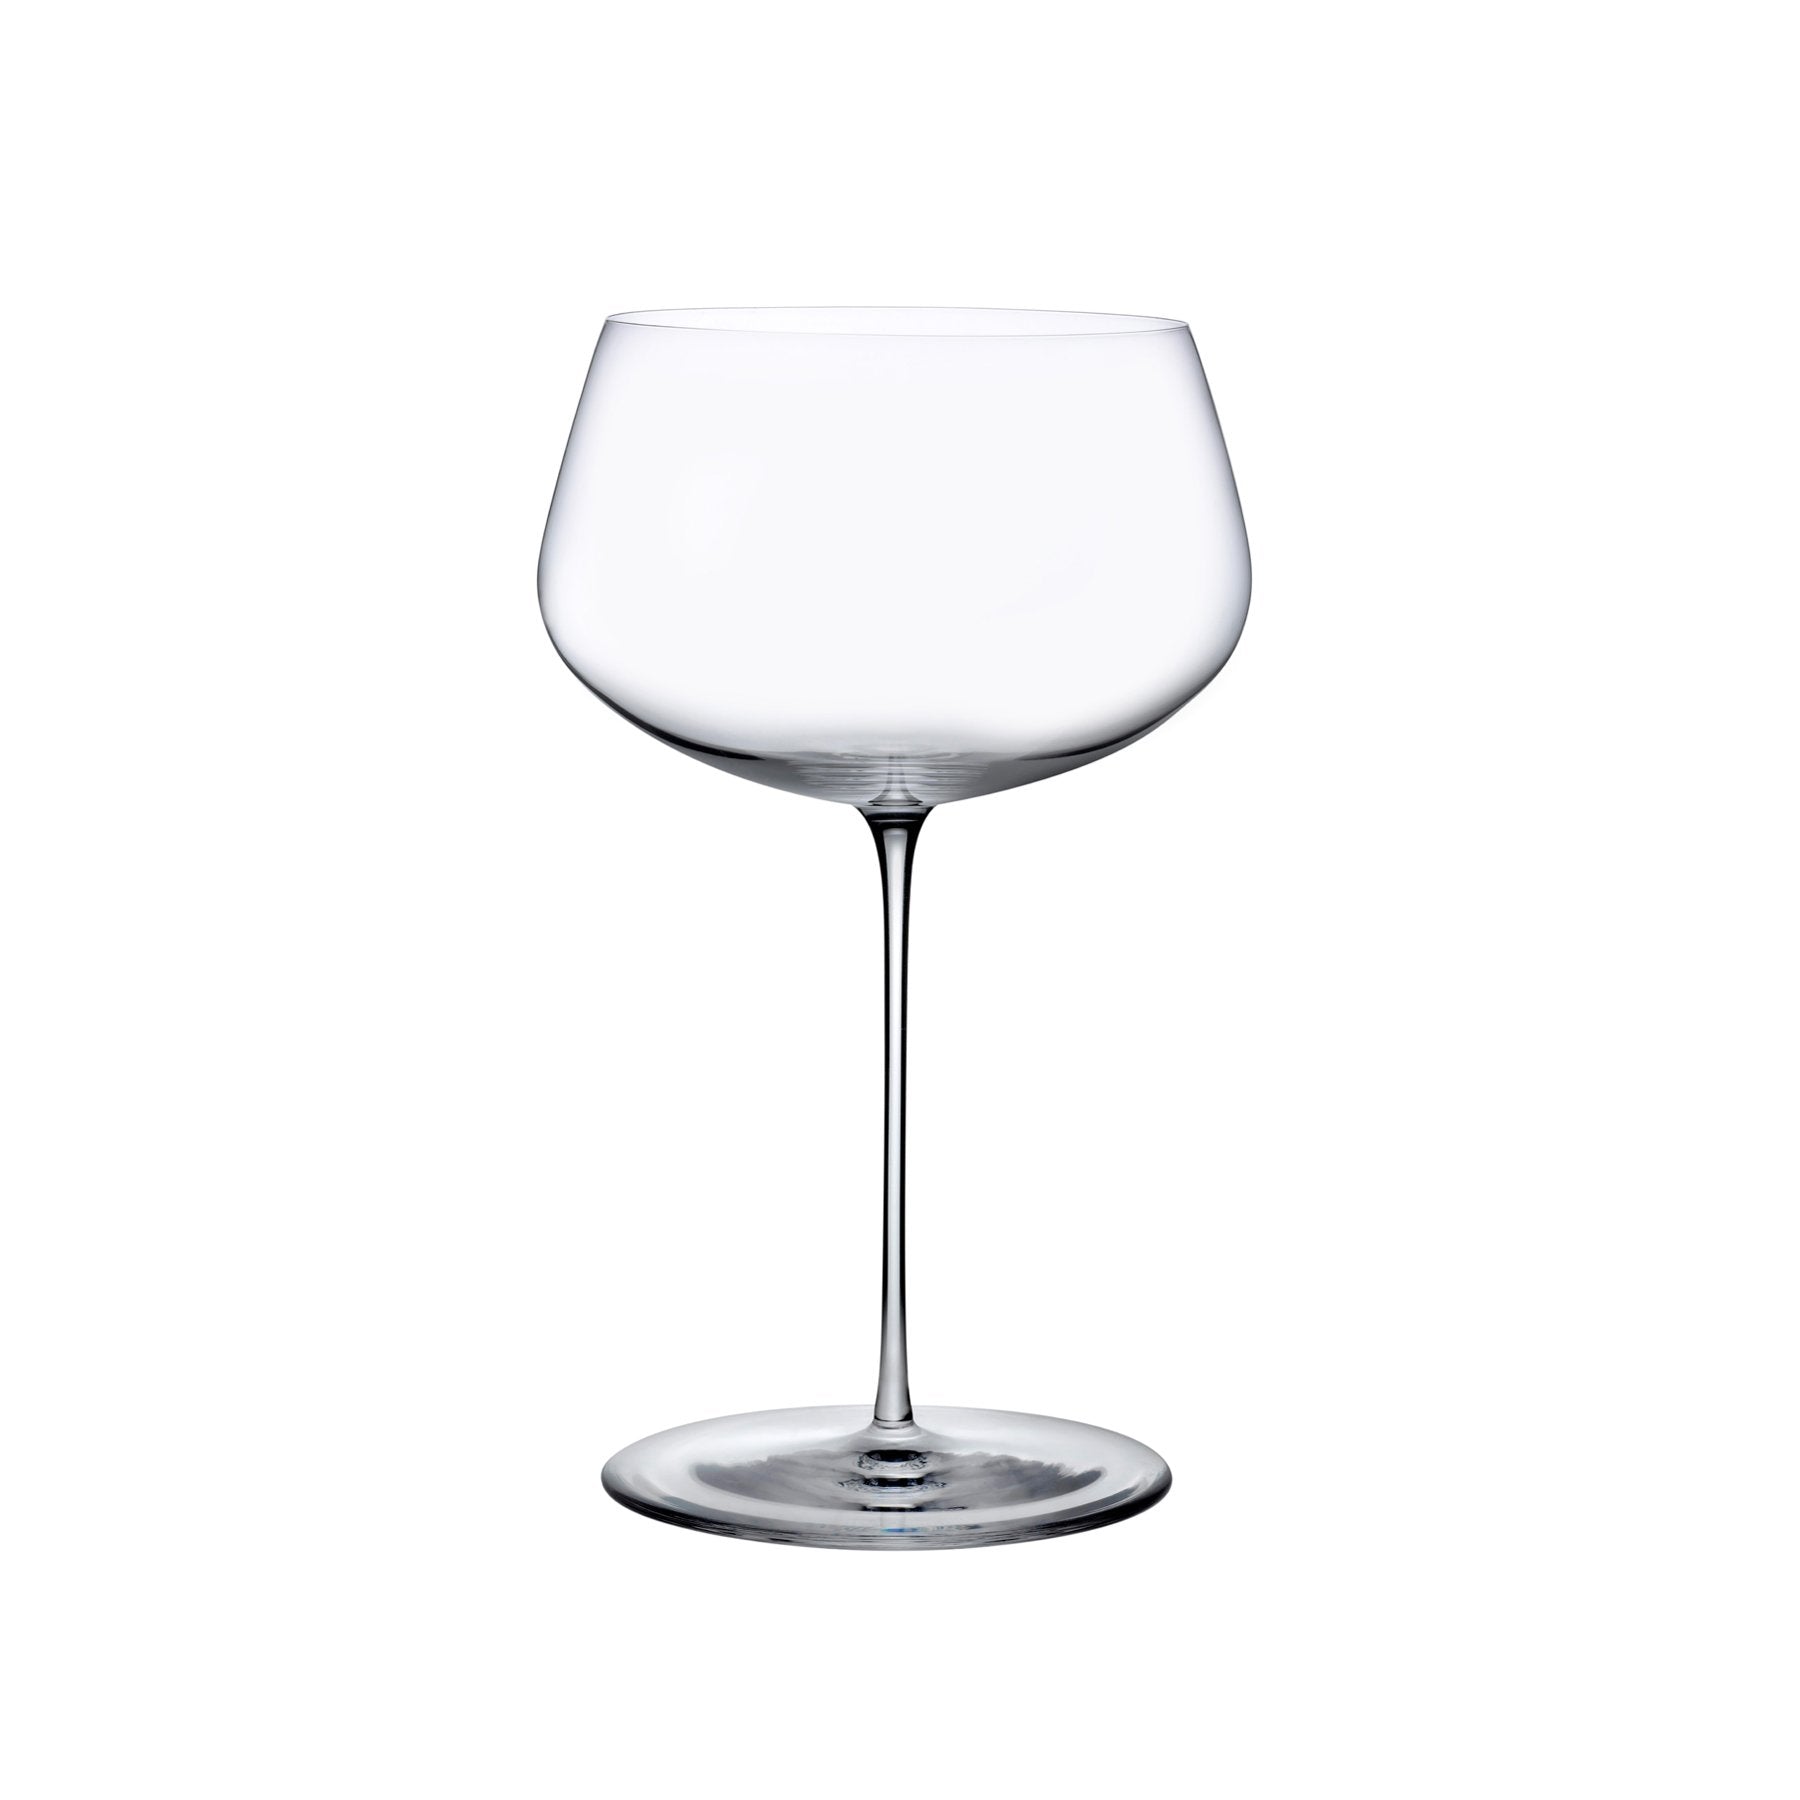 Stem Zero Full Bodied White Wine Glass